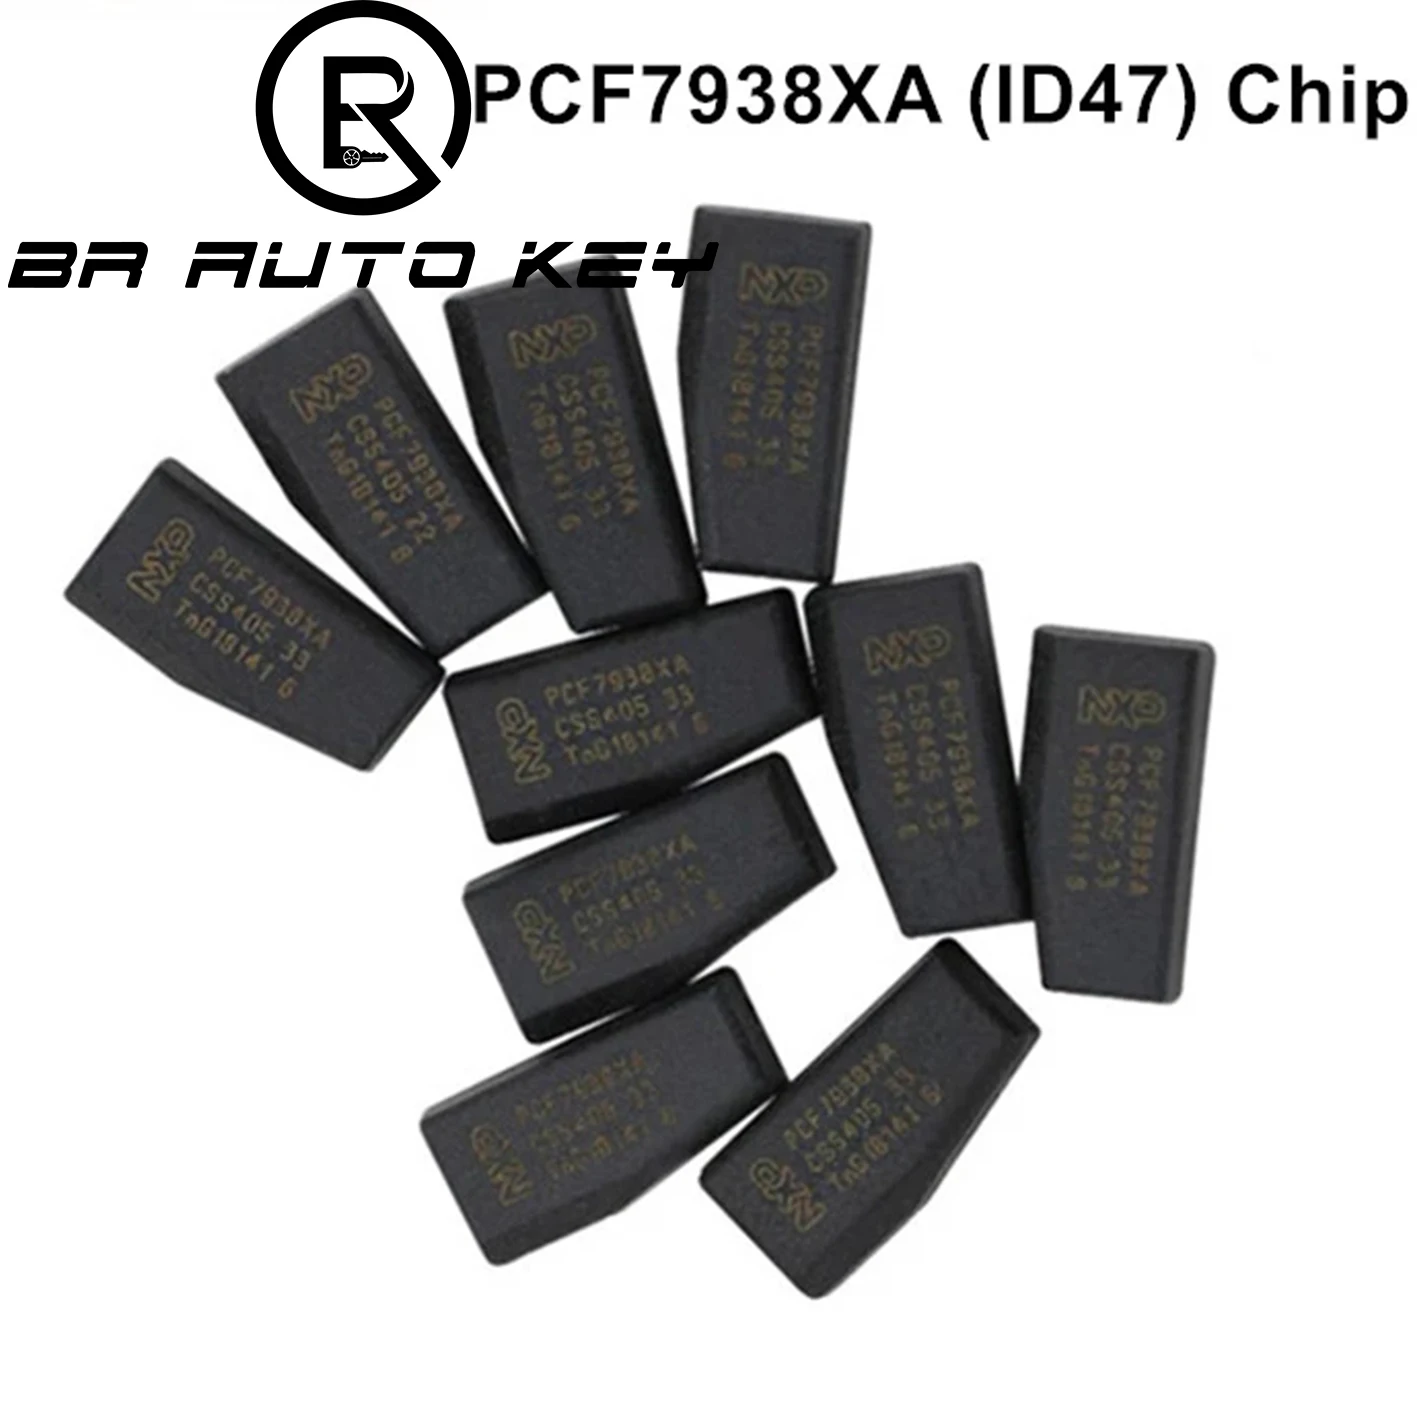 Car Key Transponder Chip PCF7938XA ID47 PCF7938 7938XA 7938 Chip G Chip Car Key immobilizer Chip For Suzuki Hyundai Honda 2014